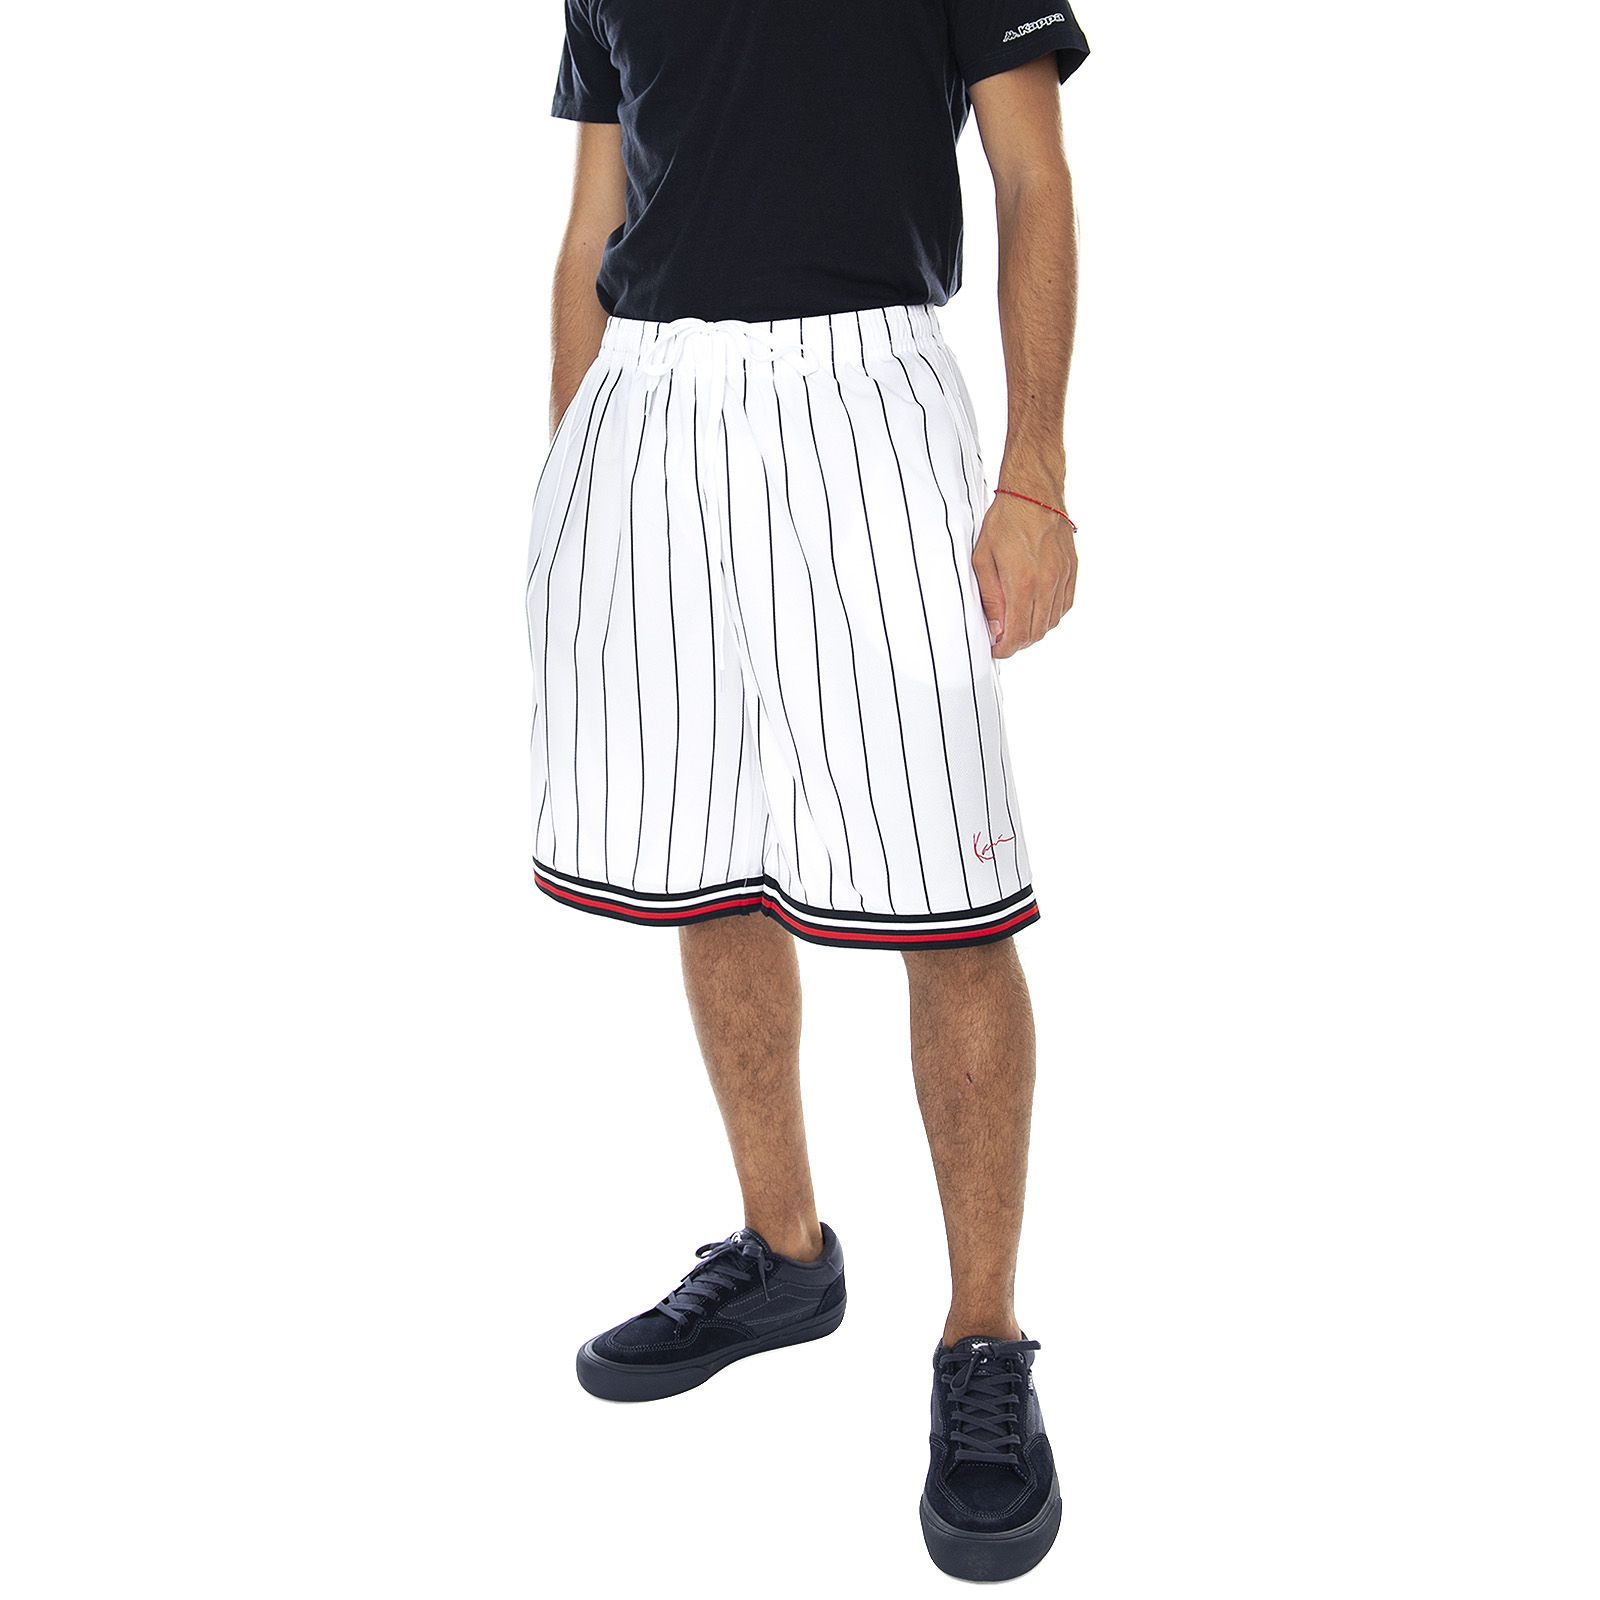 Kappa Black Pinstripe Heavy Mesh Basketball Shorts S